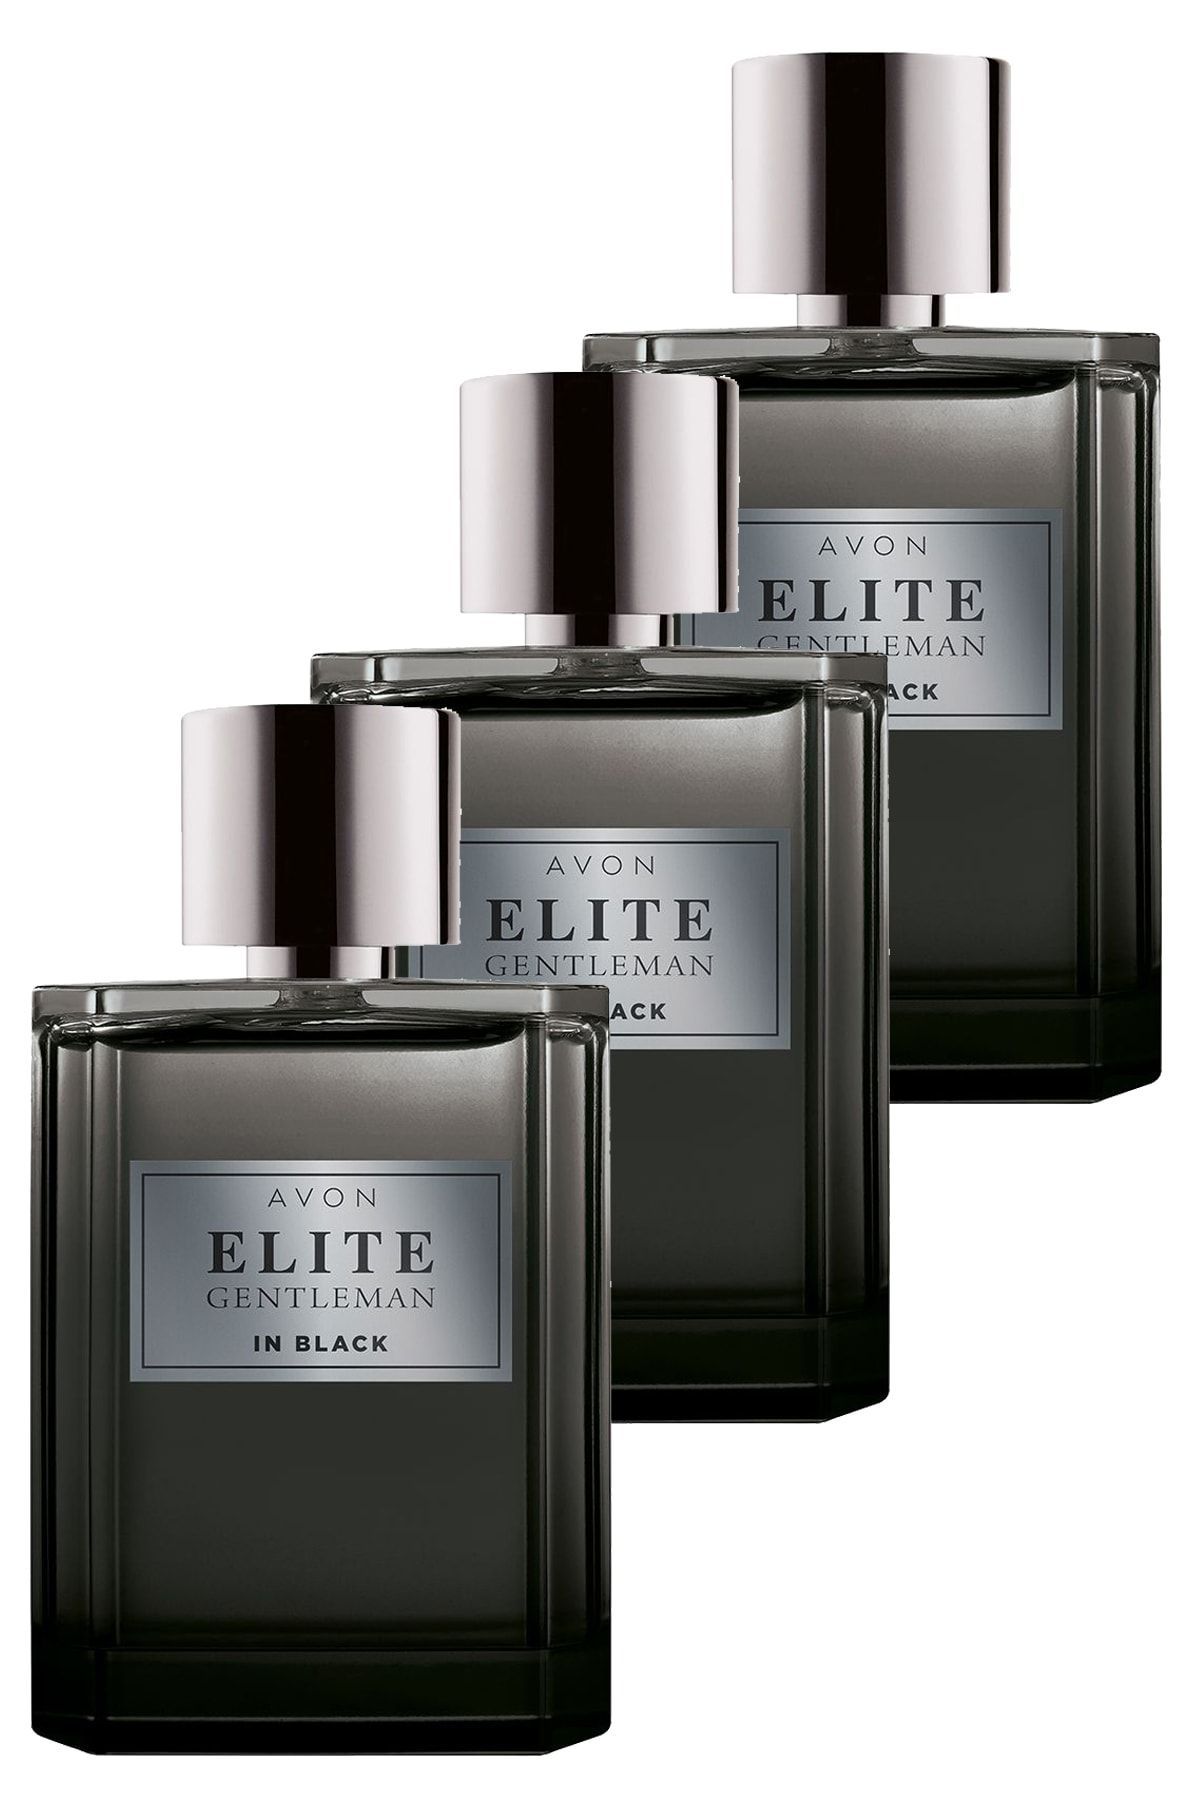 Avon Elite Gentleman in Black Erkek Parfüm Edt 75 Ml. Üçlü Set